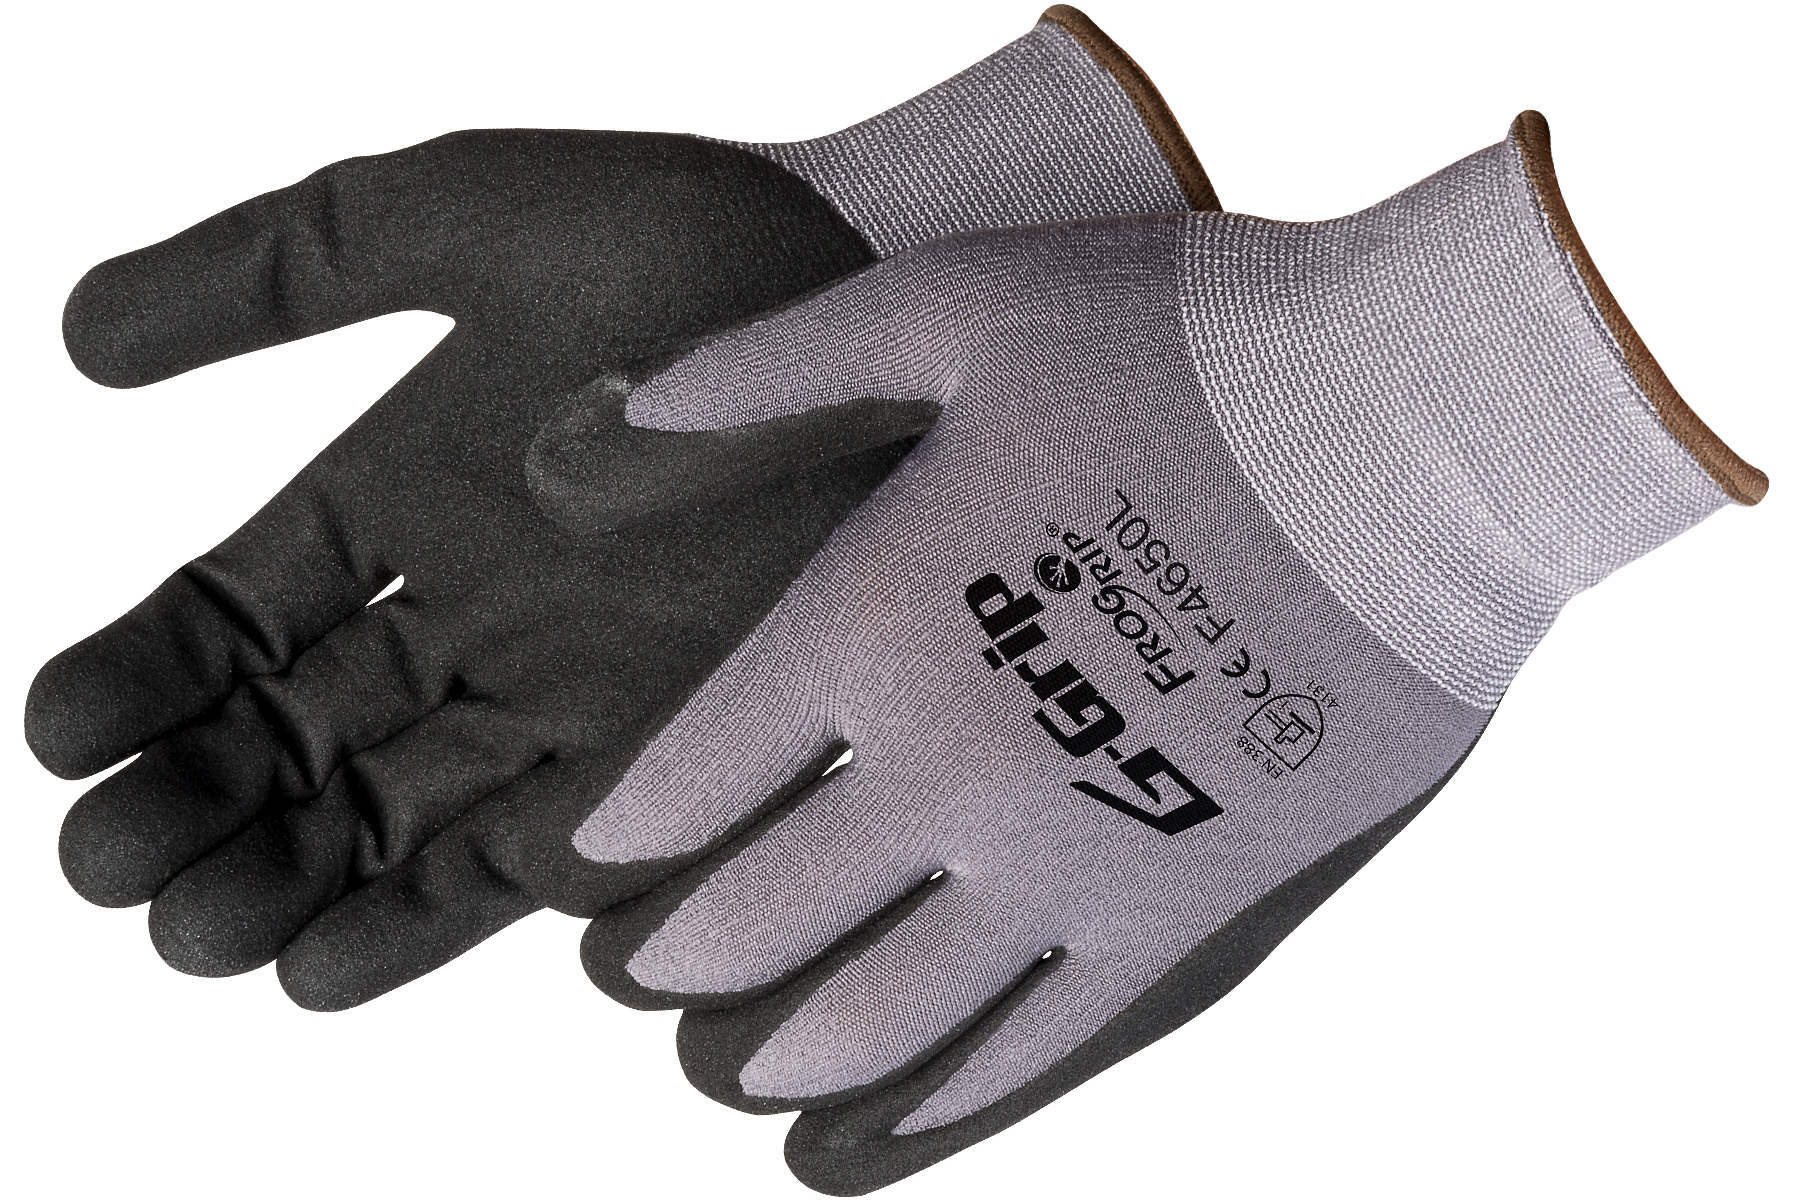 Liberty F4650 Nylon Shell Nitrile Palm G-Grip Work Glove - Workman